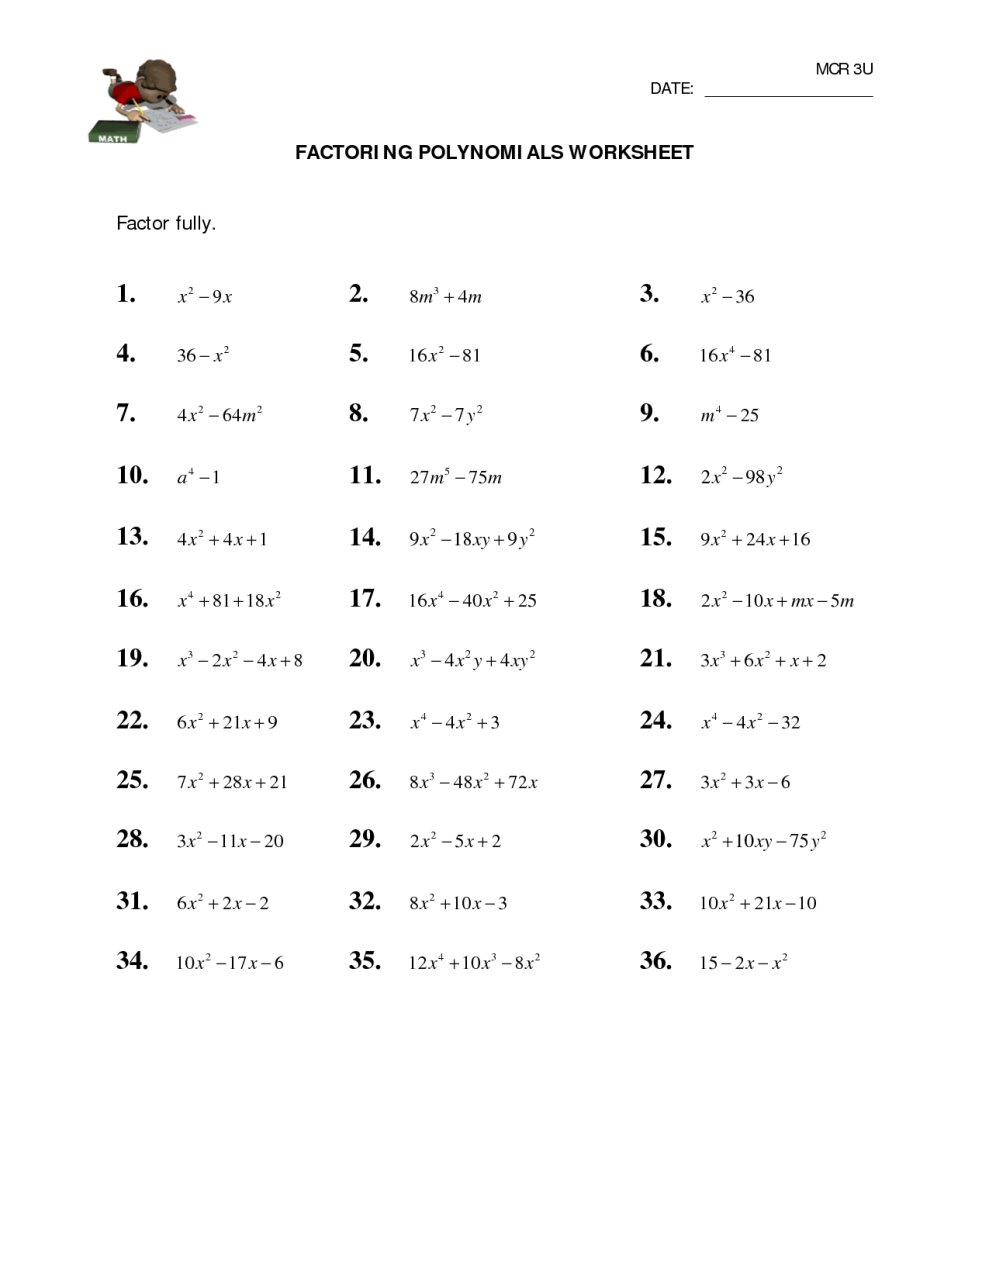 Factoring Practice Worksheet Algebra 1